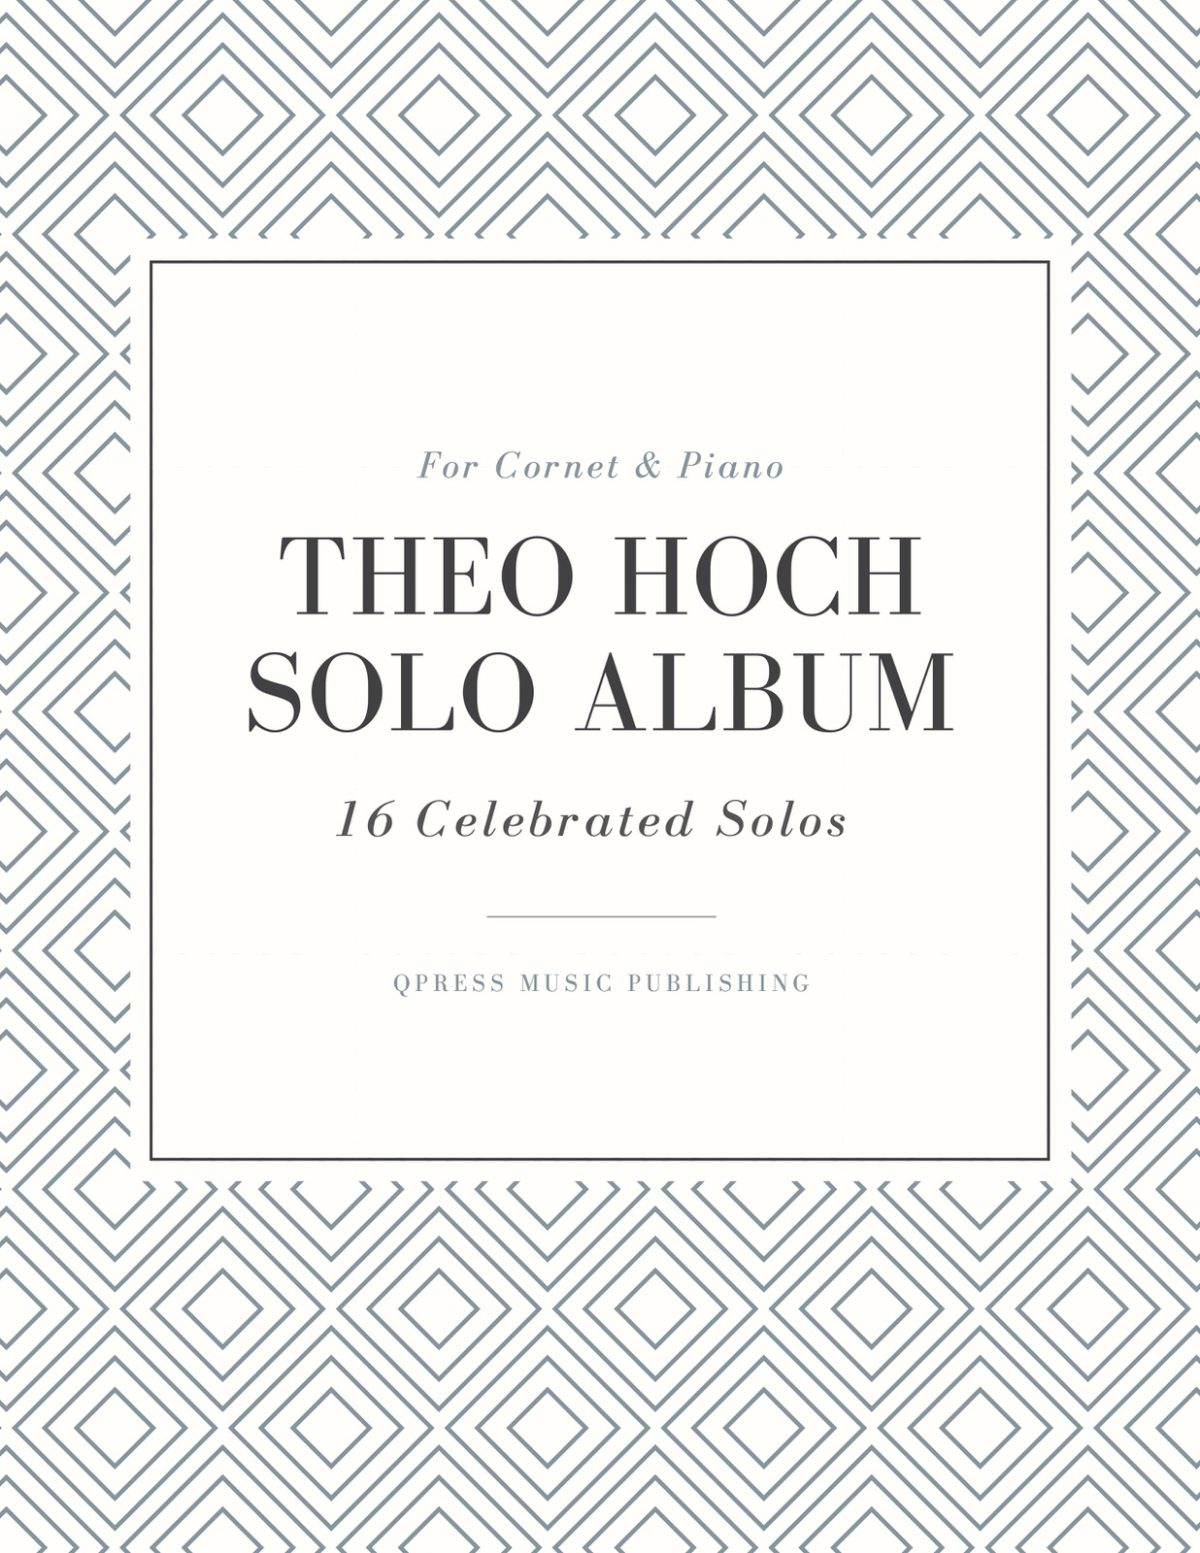 16 Celebrated Solos (Theo Hoch Album)